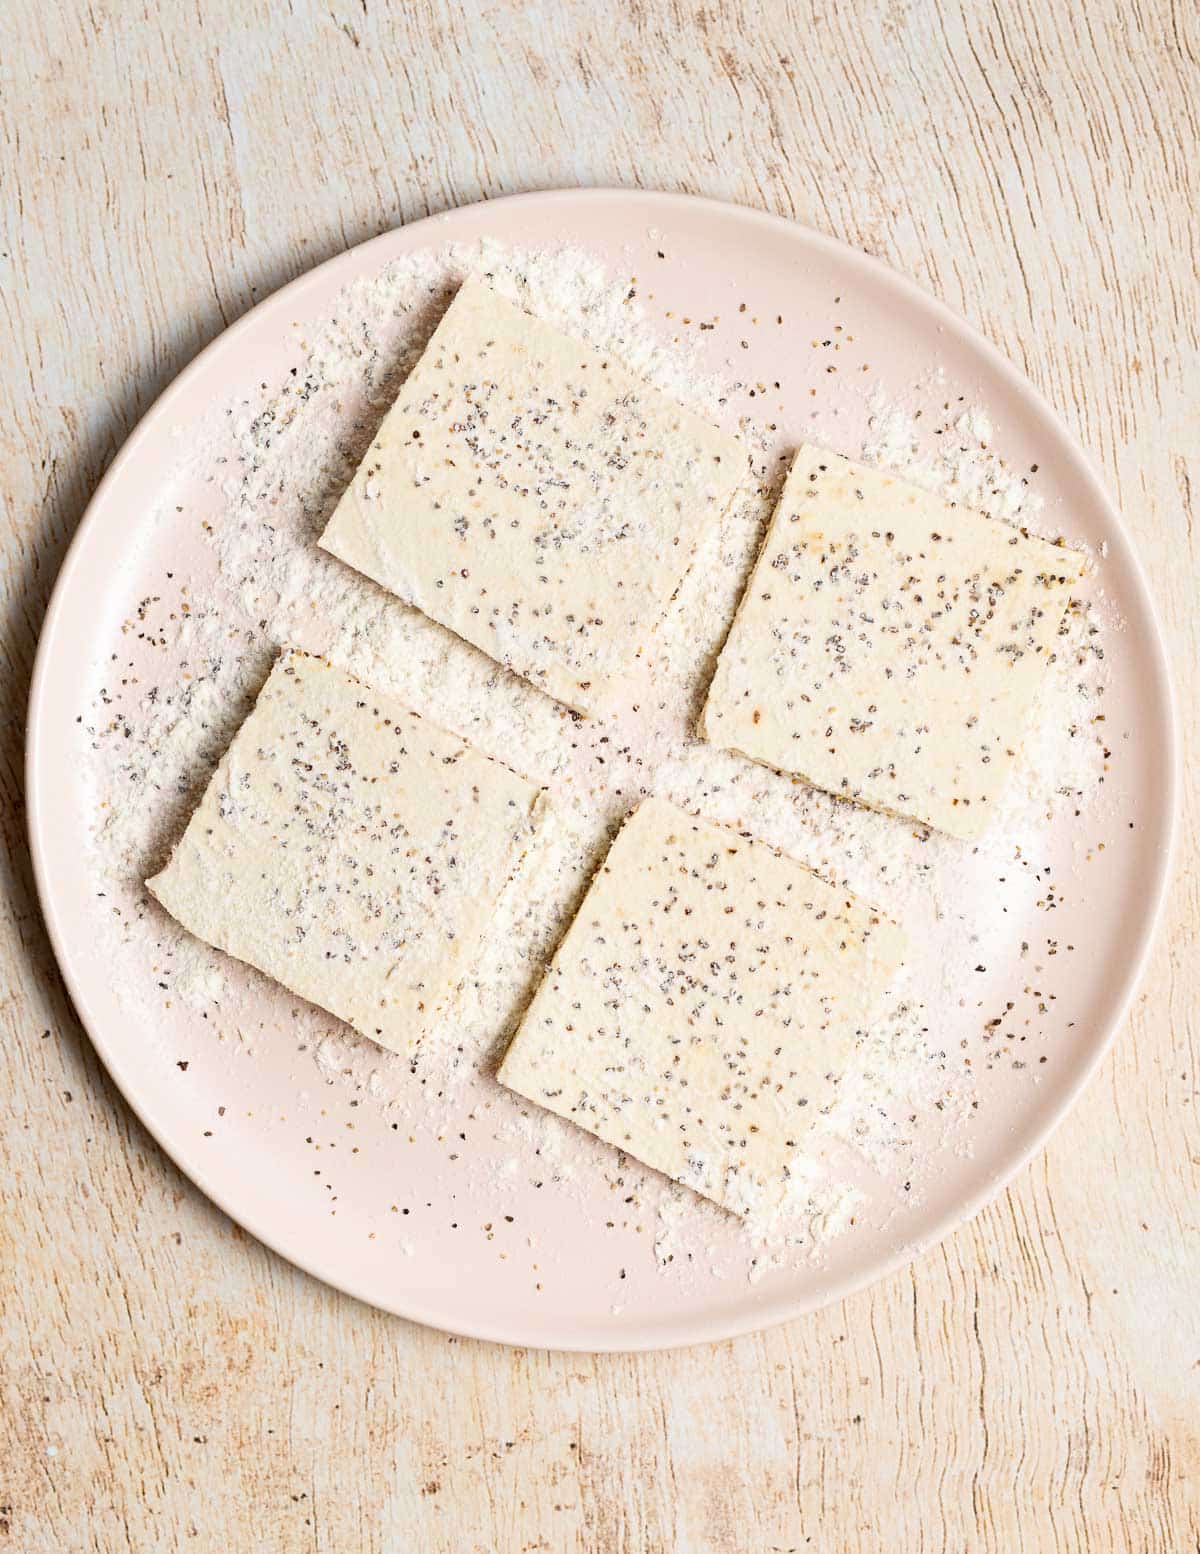 floured and seasoned tofu squares on a plate